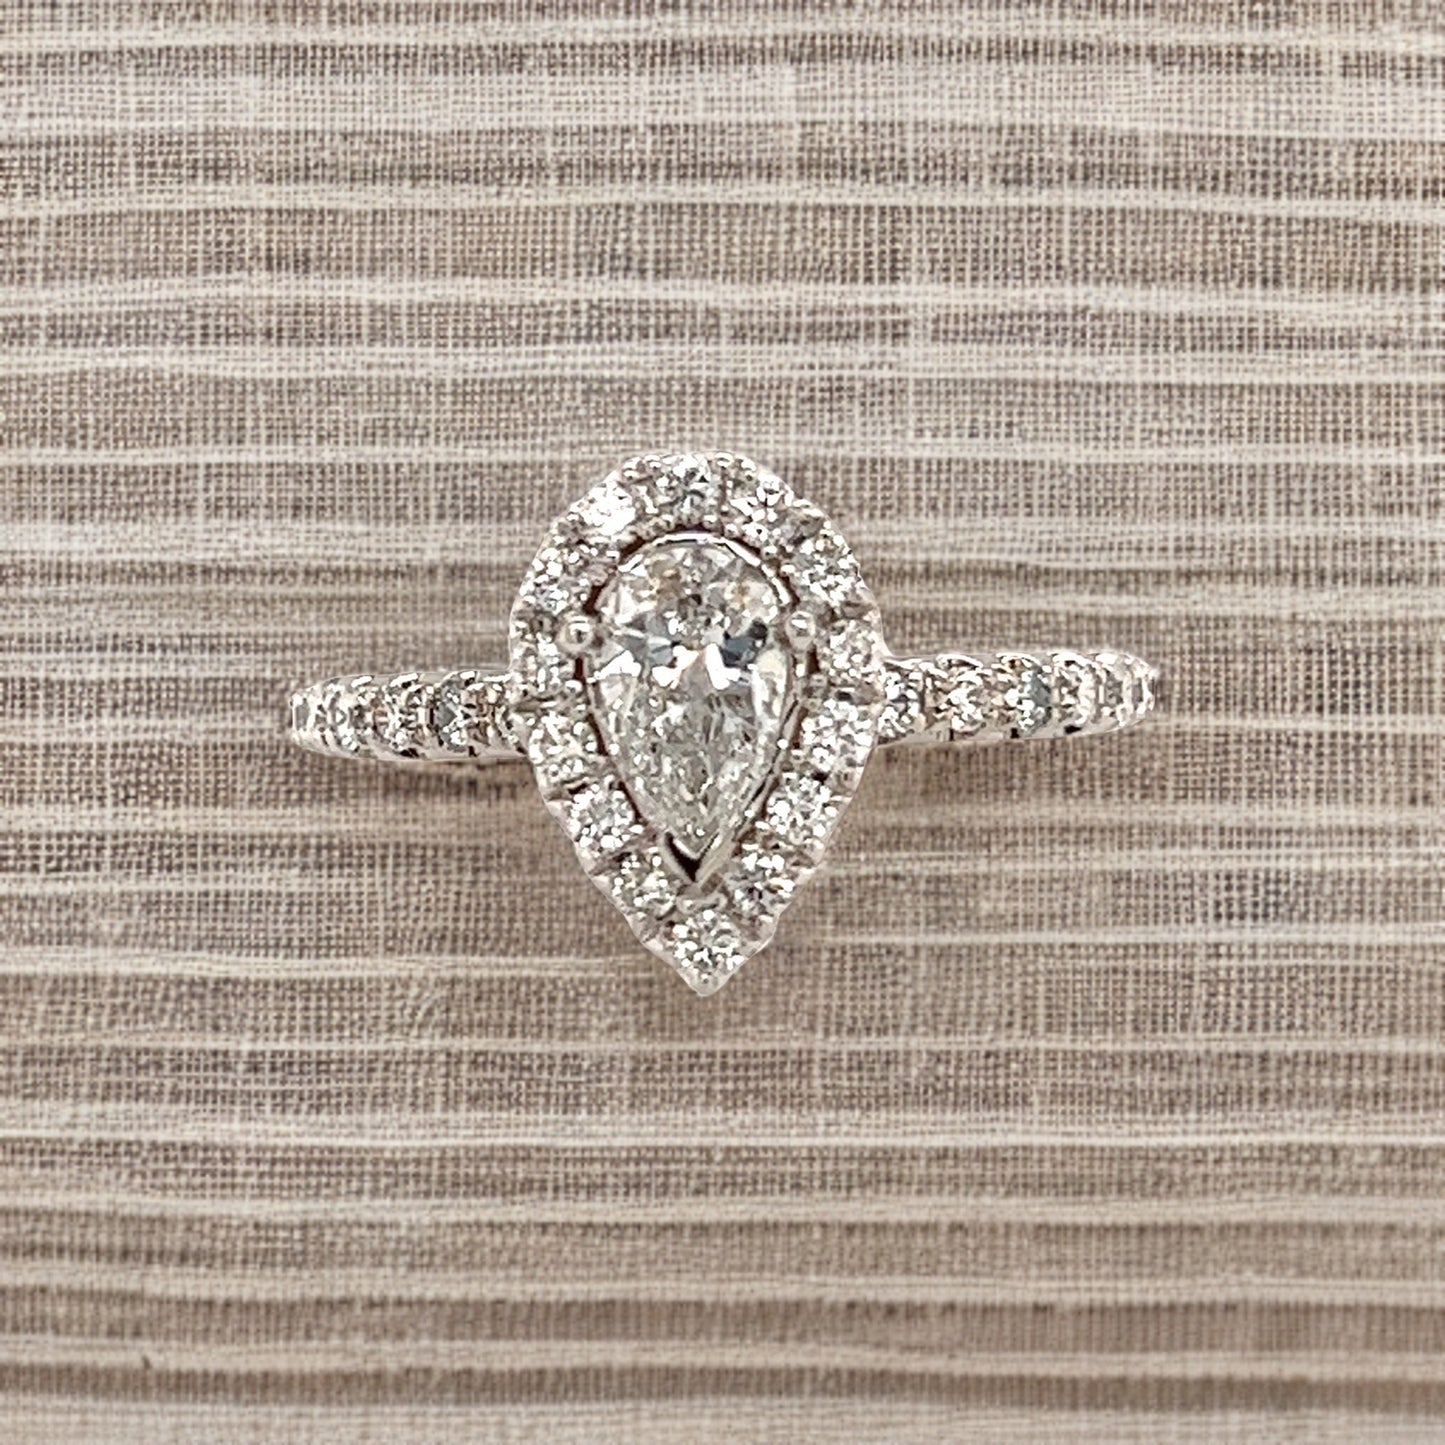 Diamond Engagement Ring 14k White Gold 0.90 TCW Certified $4,950 210736